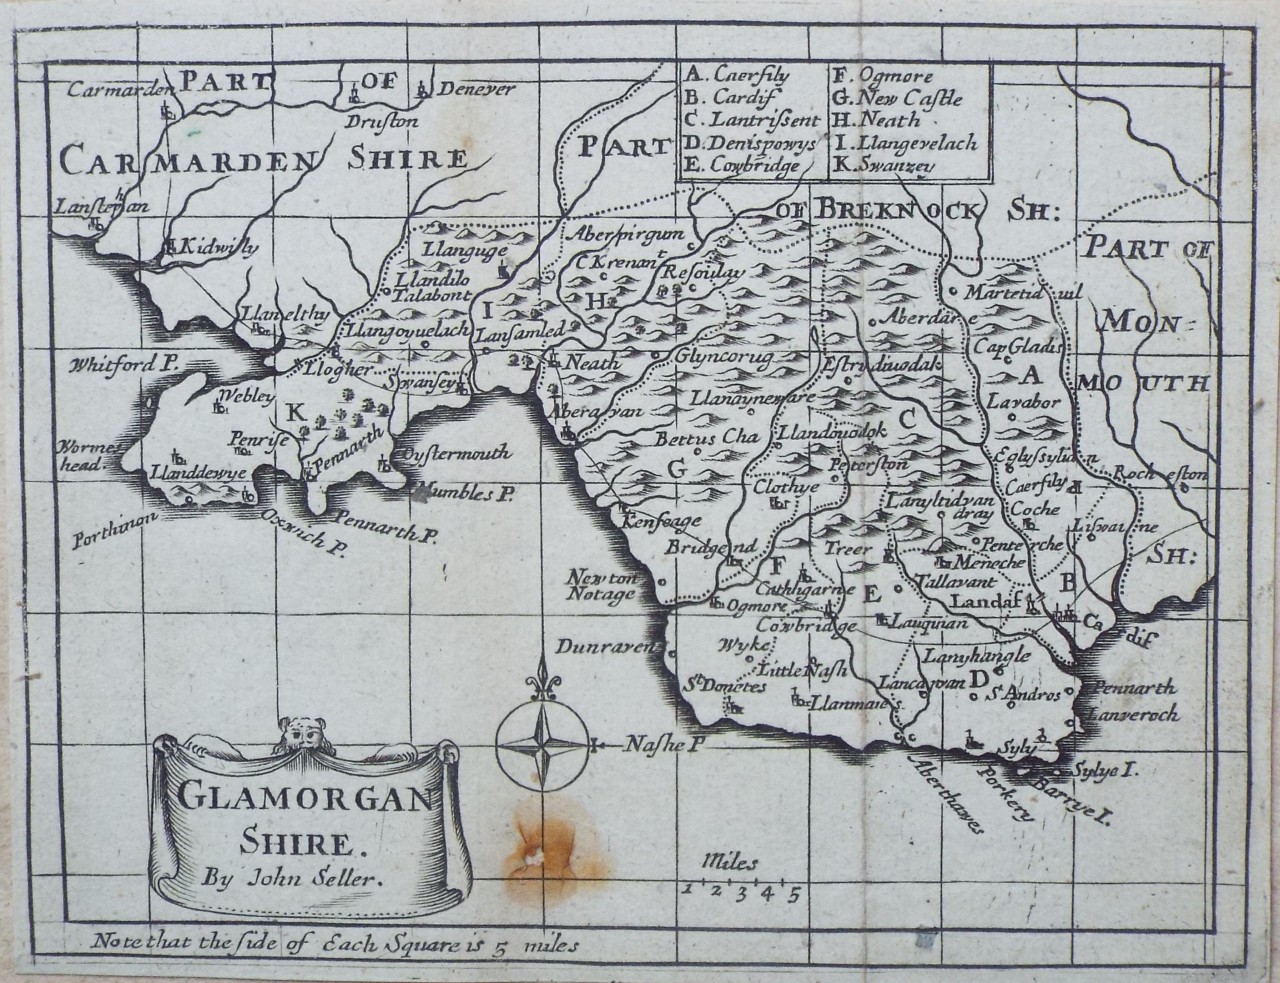 Map of Glamorganshire